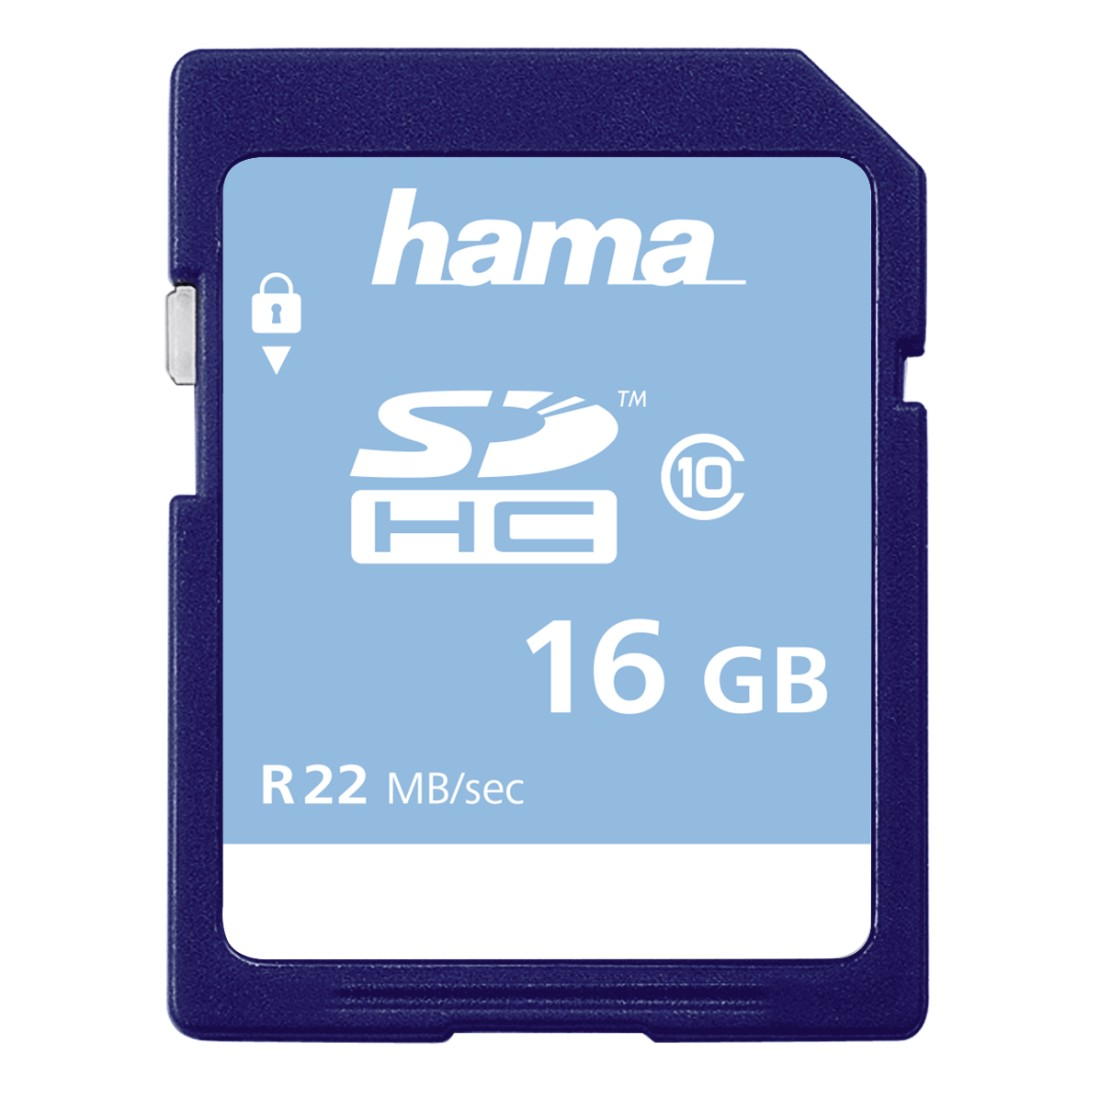 HAMA 10, SDHC 16 GB, Speicherkarte, 22 MB/s Class